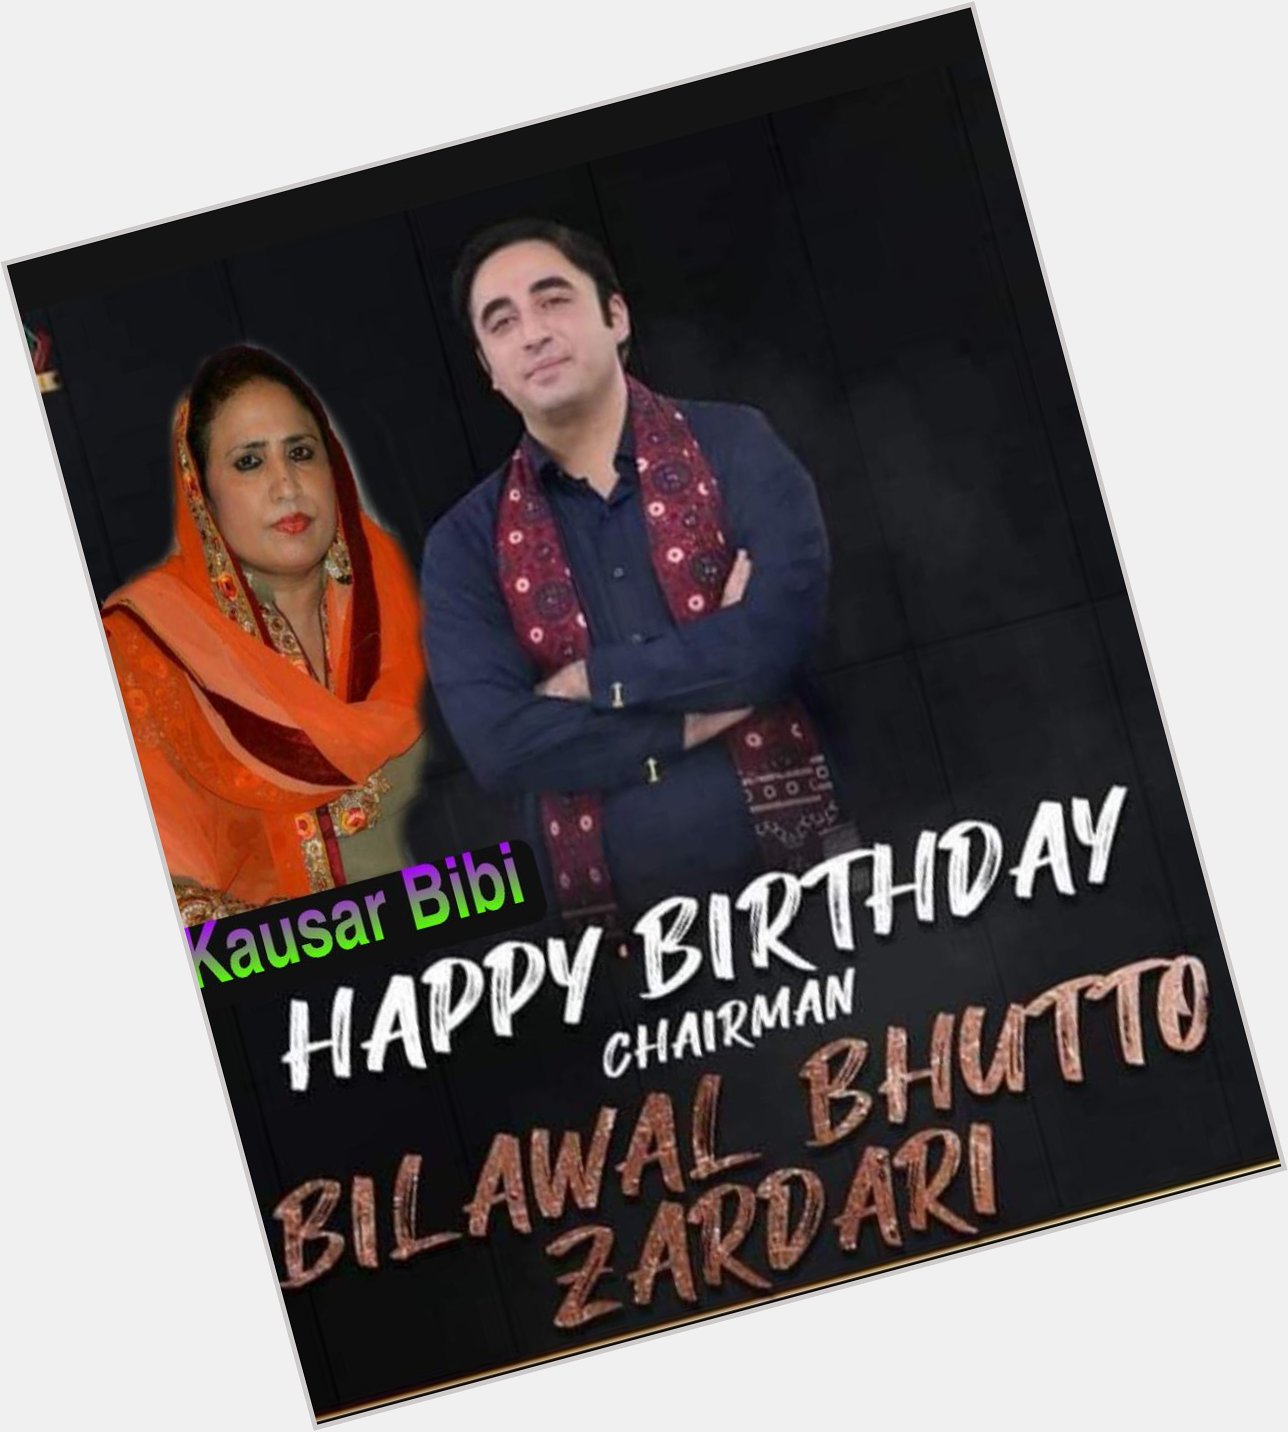 Happy Birthday My Beloved Chairman Bilawal Bhutto Zardari sb      